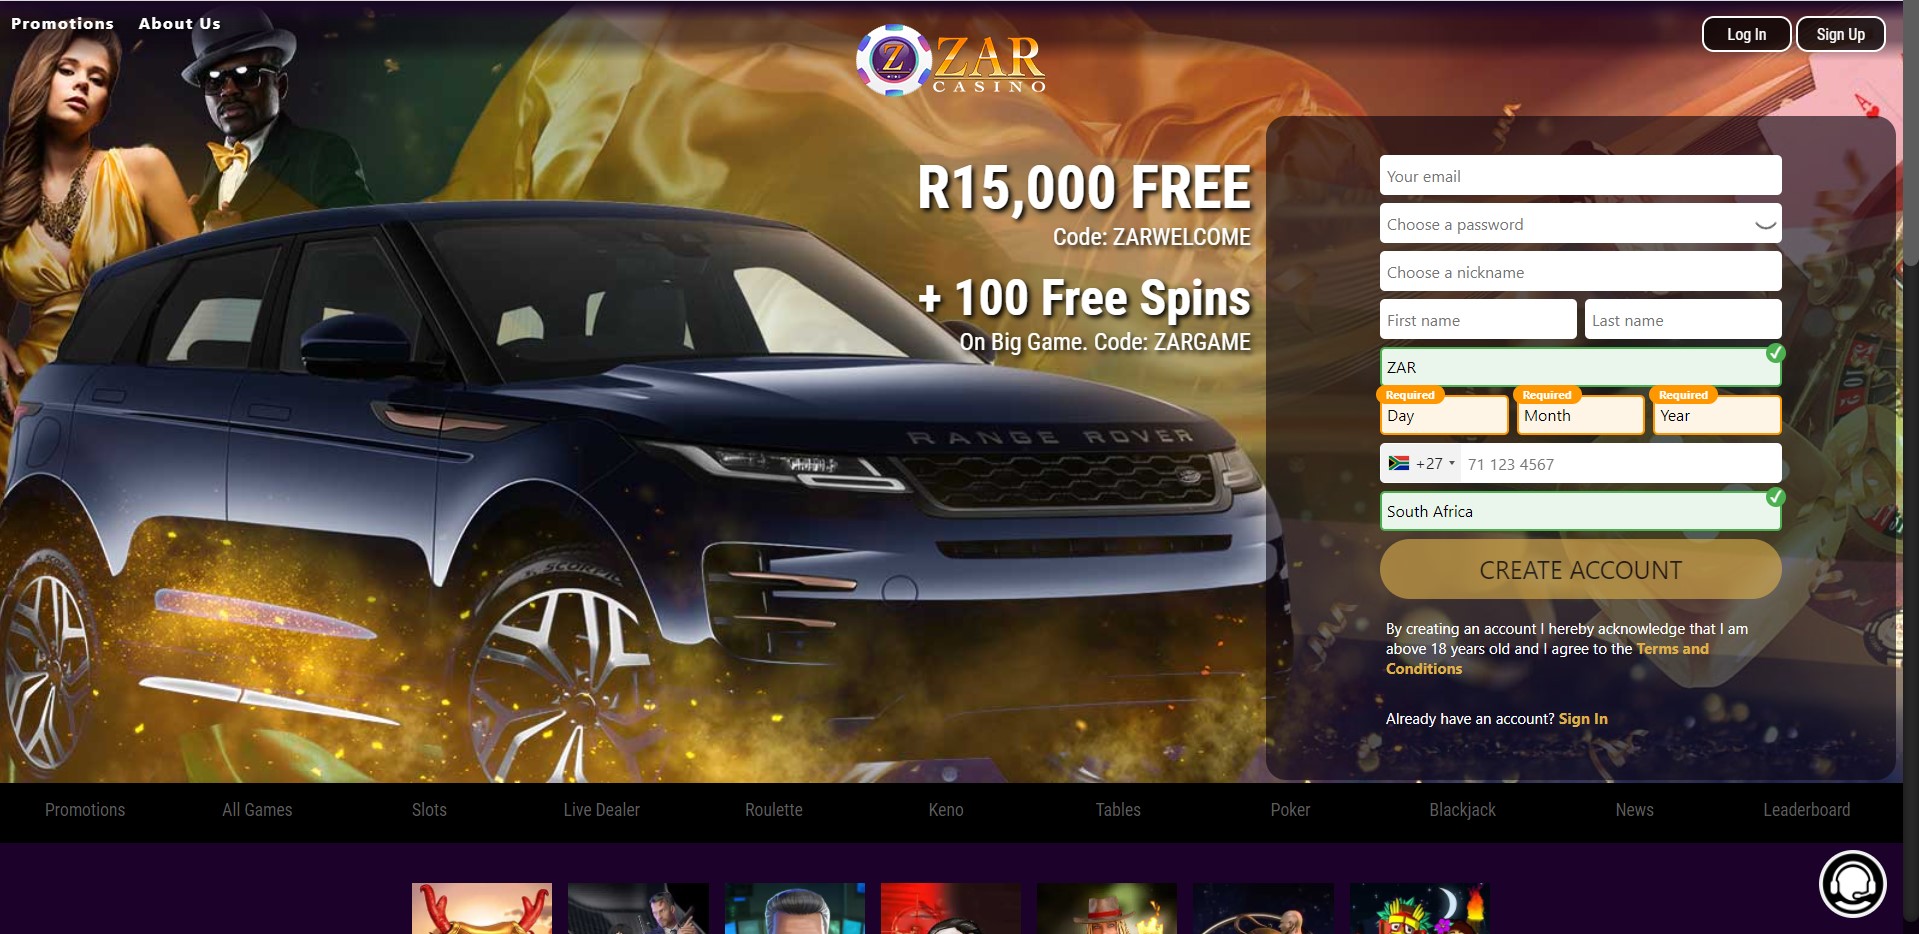 Zar Casino home page banner